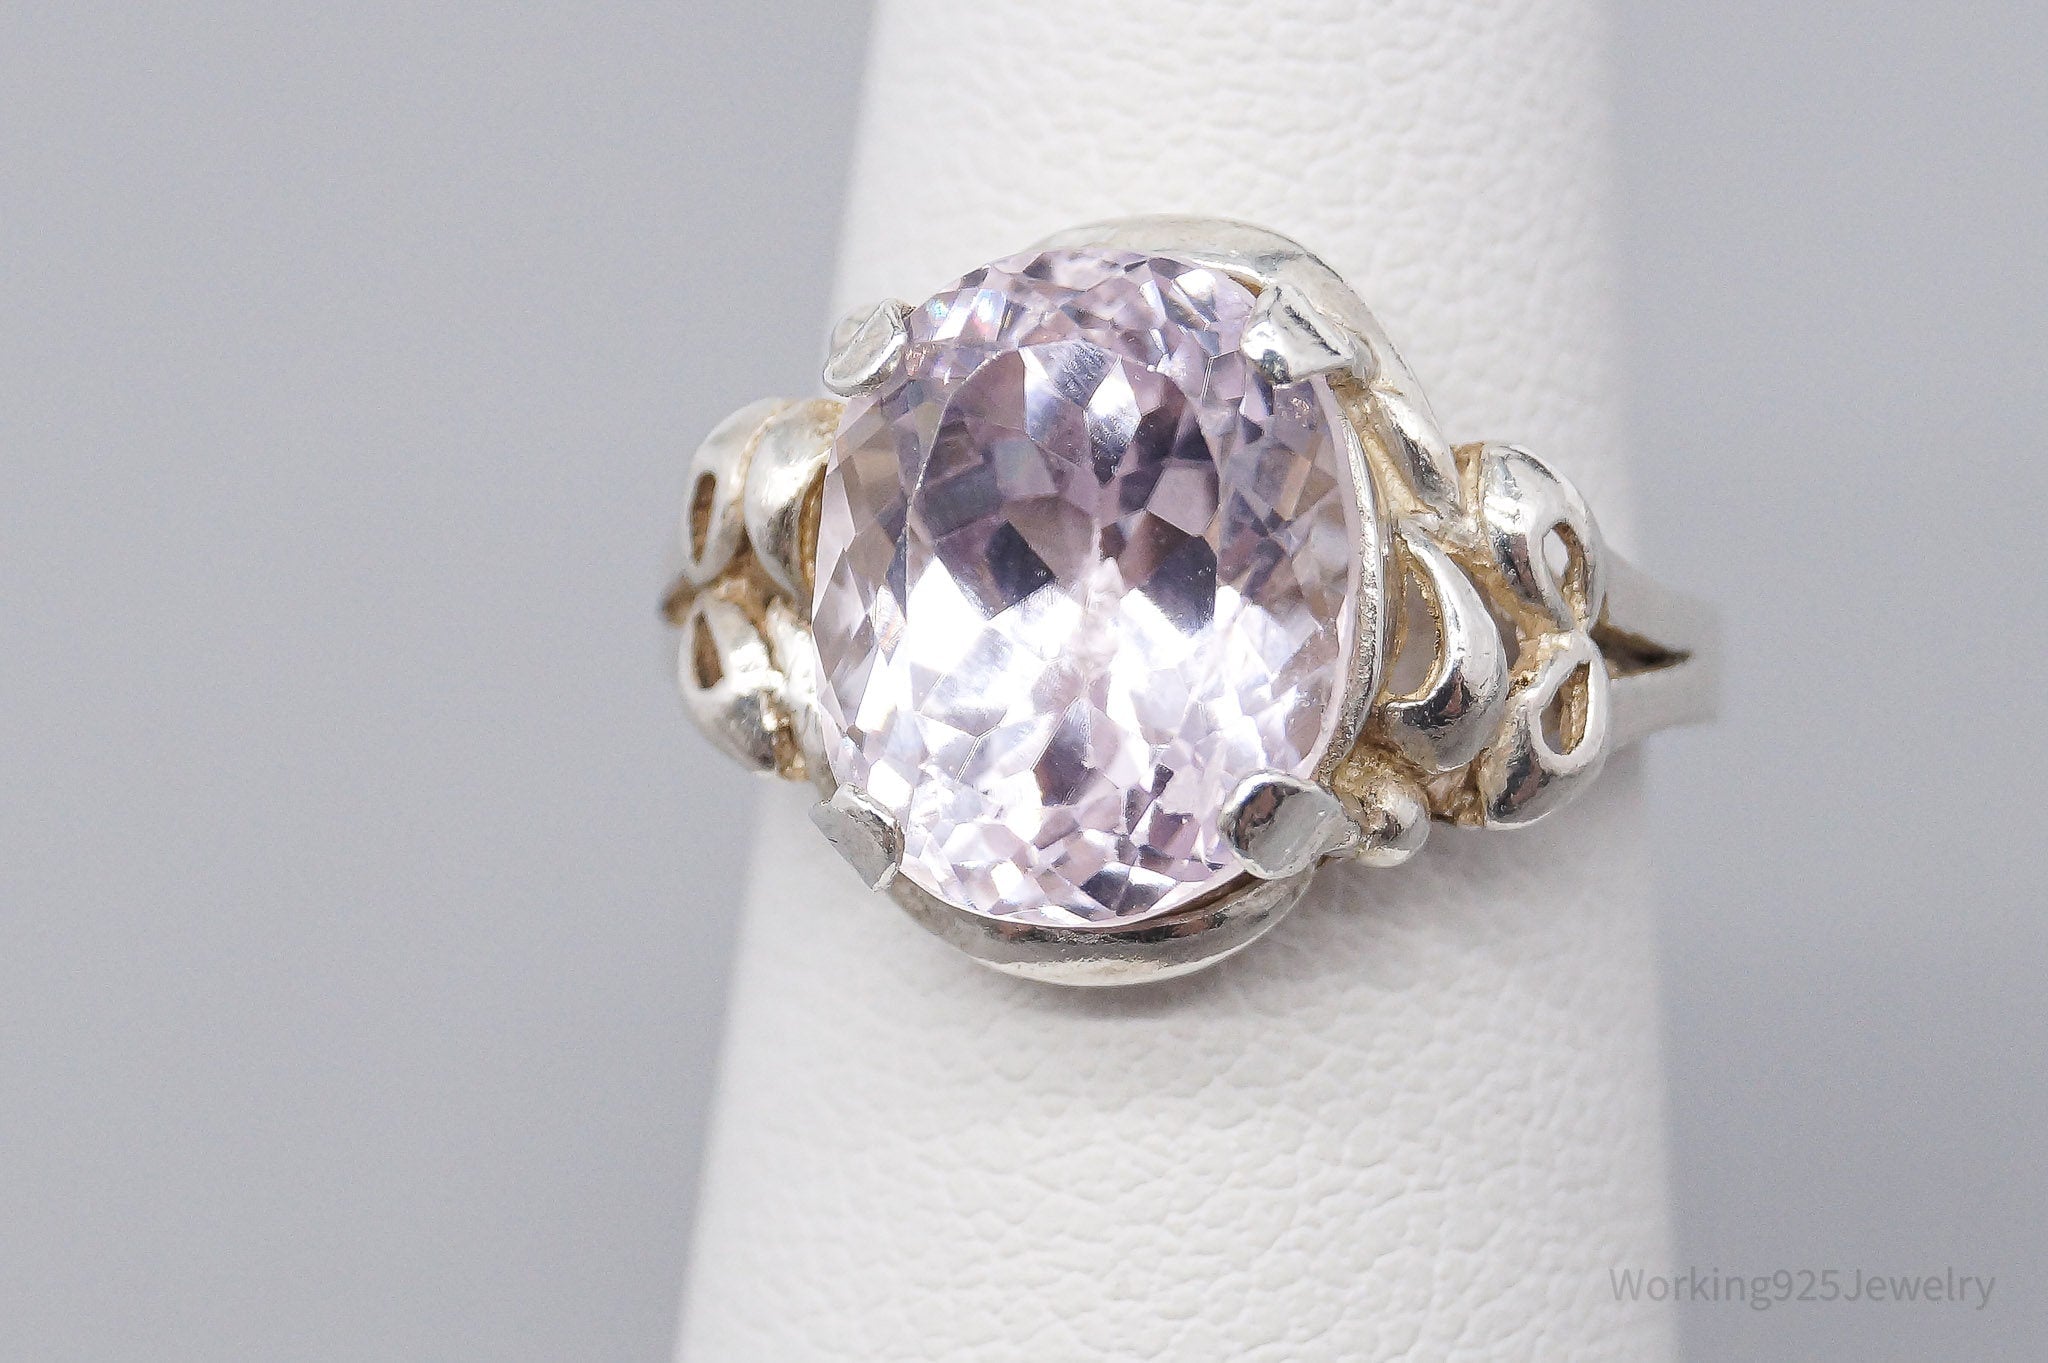 Vintage Large Pink Amethyst Sterling Silver Ring - Size 4.75